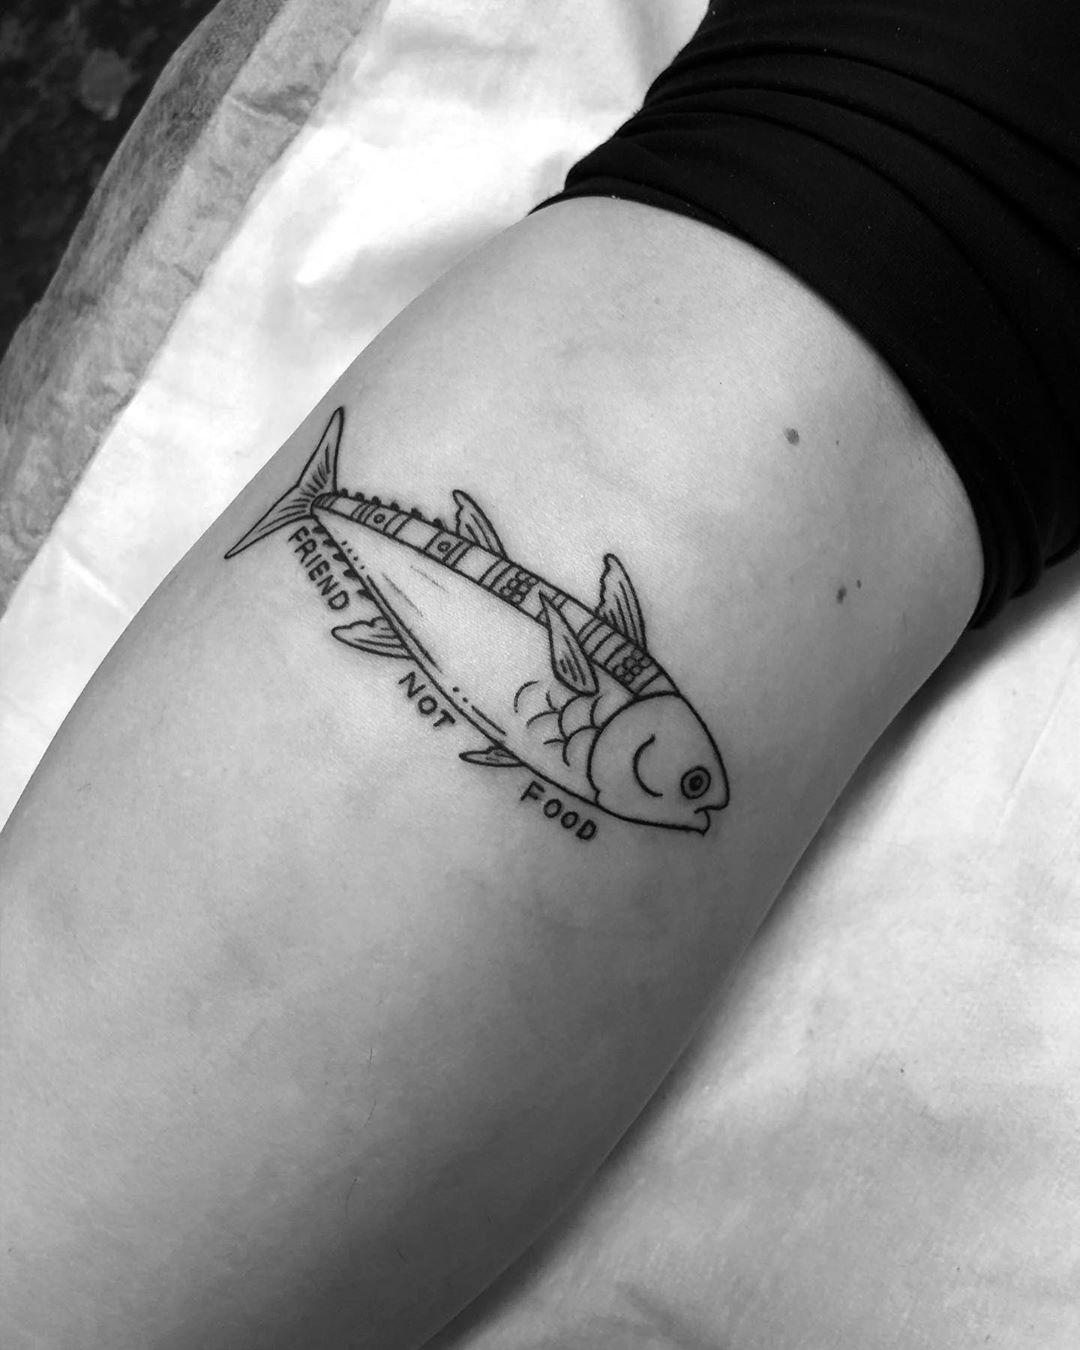 Black fish tattoo with beautiful message.